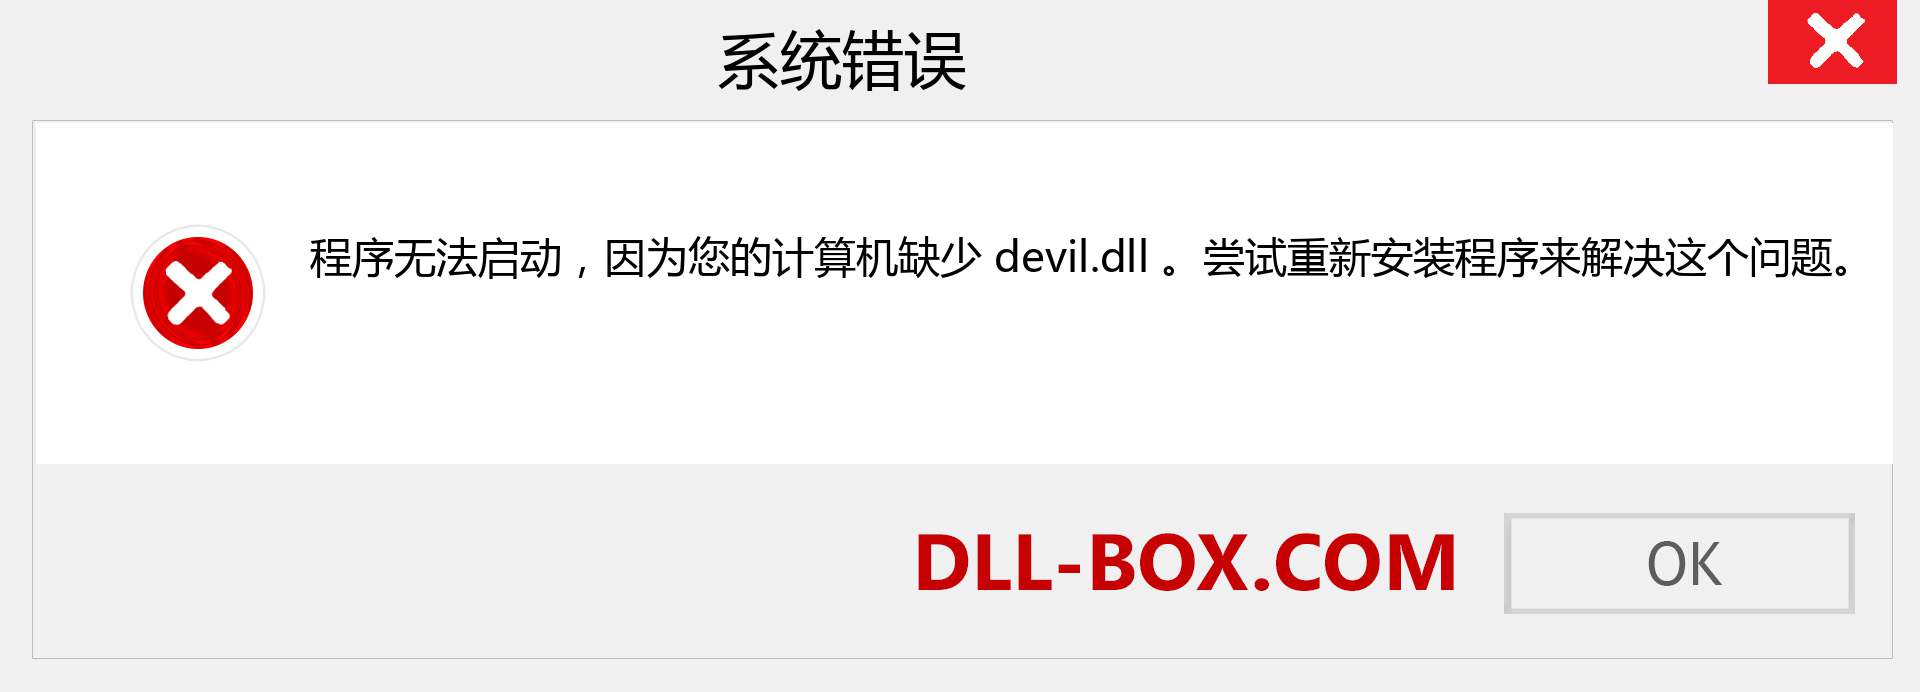 devil.dll 文件丢失？。 适用于 Windows 7、8、10 的下载 - 修复 Windows、照片、图像上的 devil dll 丢失错误